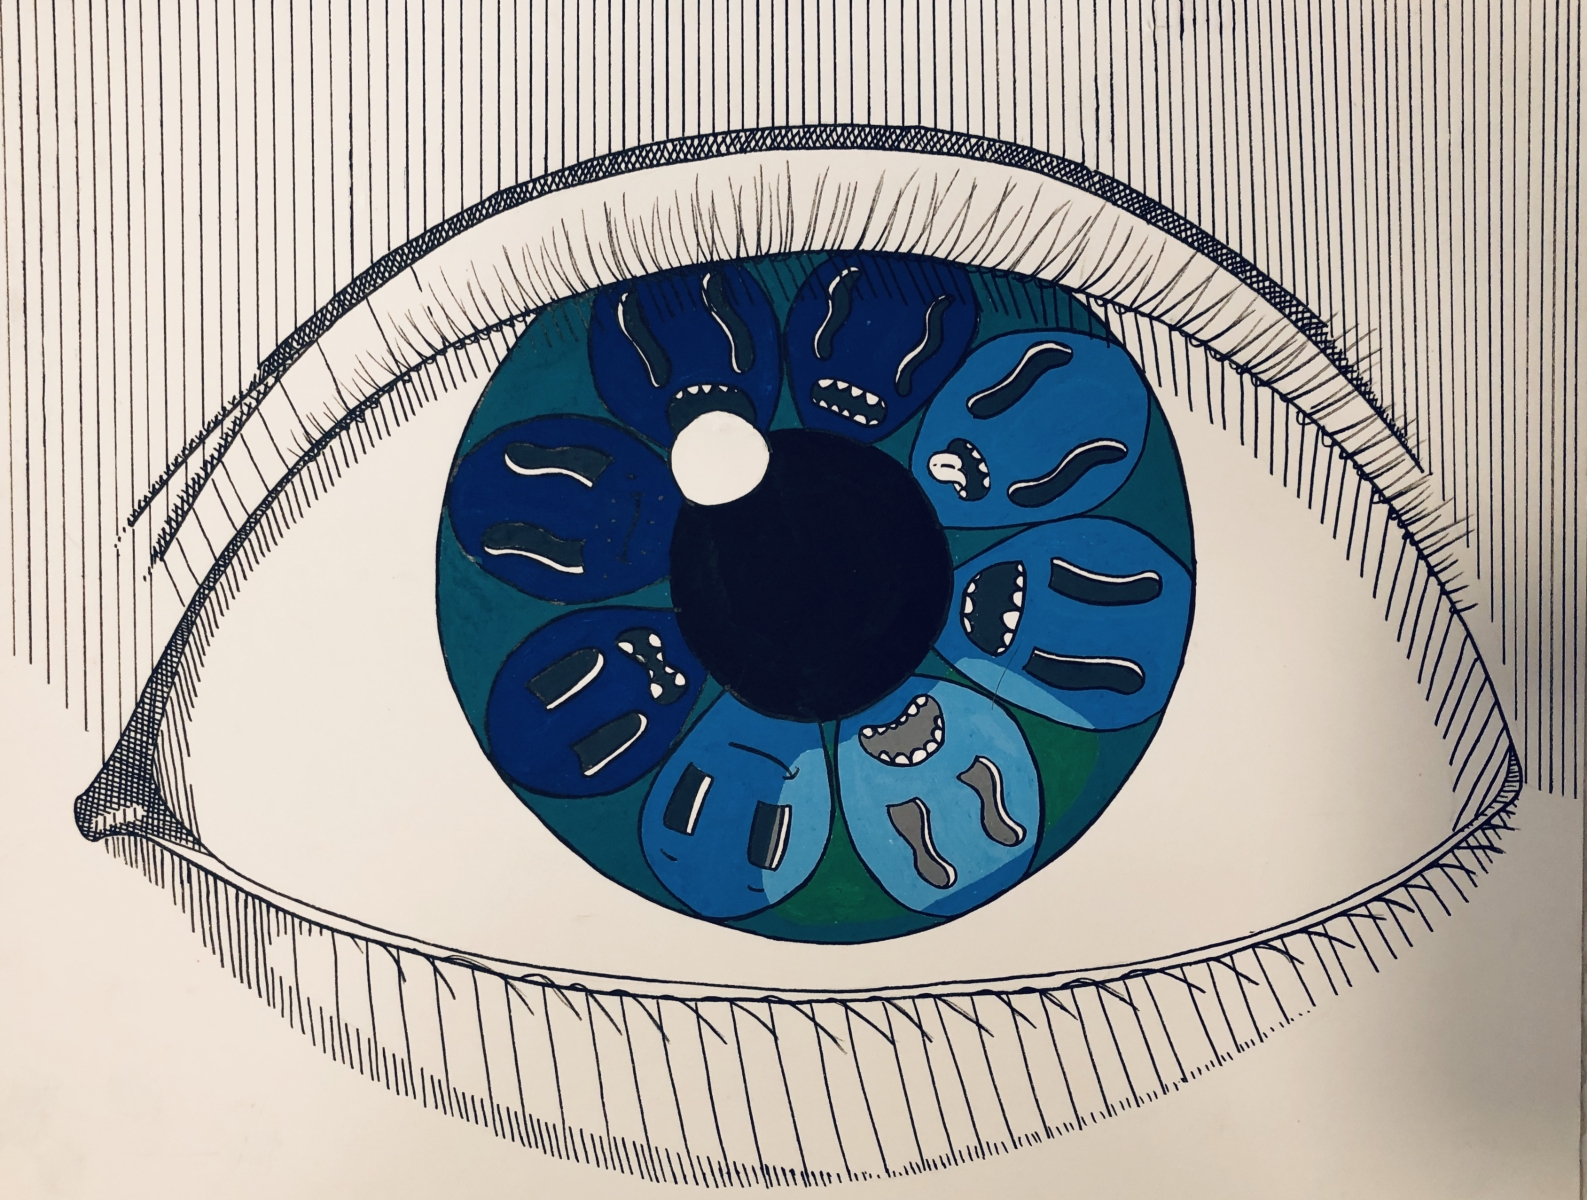 Eye by Drew Testa on Dribbble